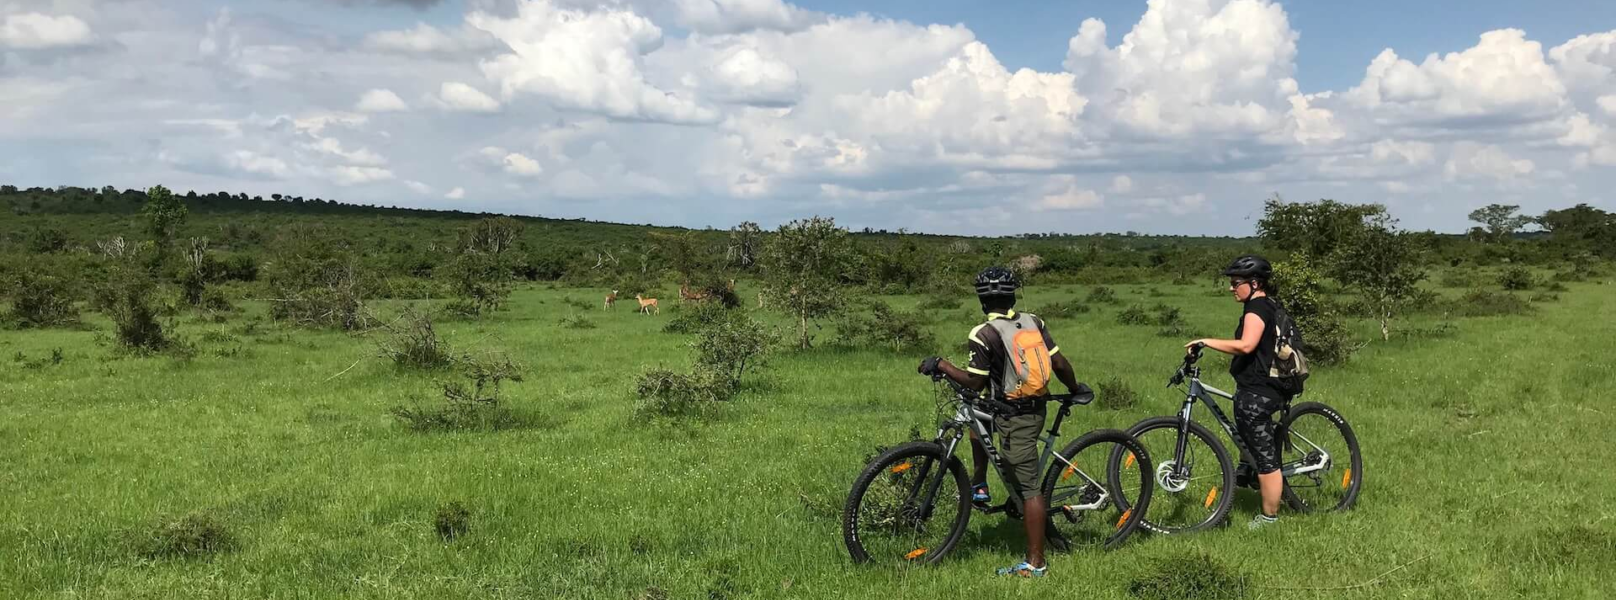 Mountainbiken en fietsen in Oeganda